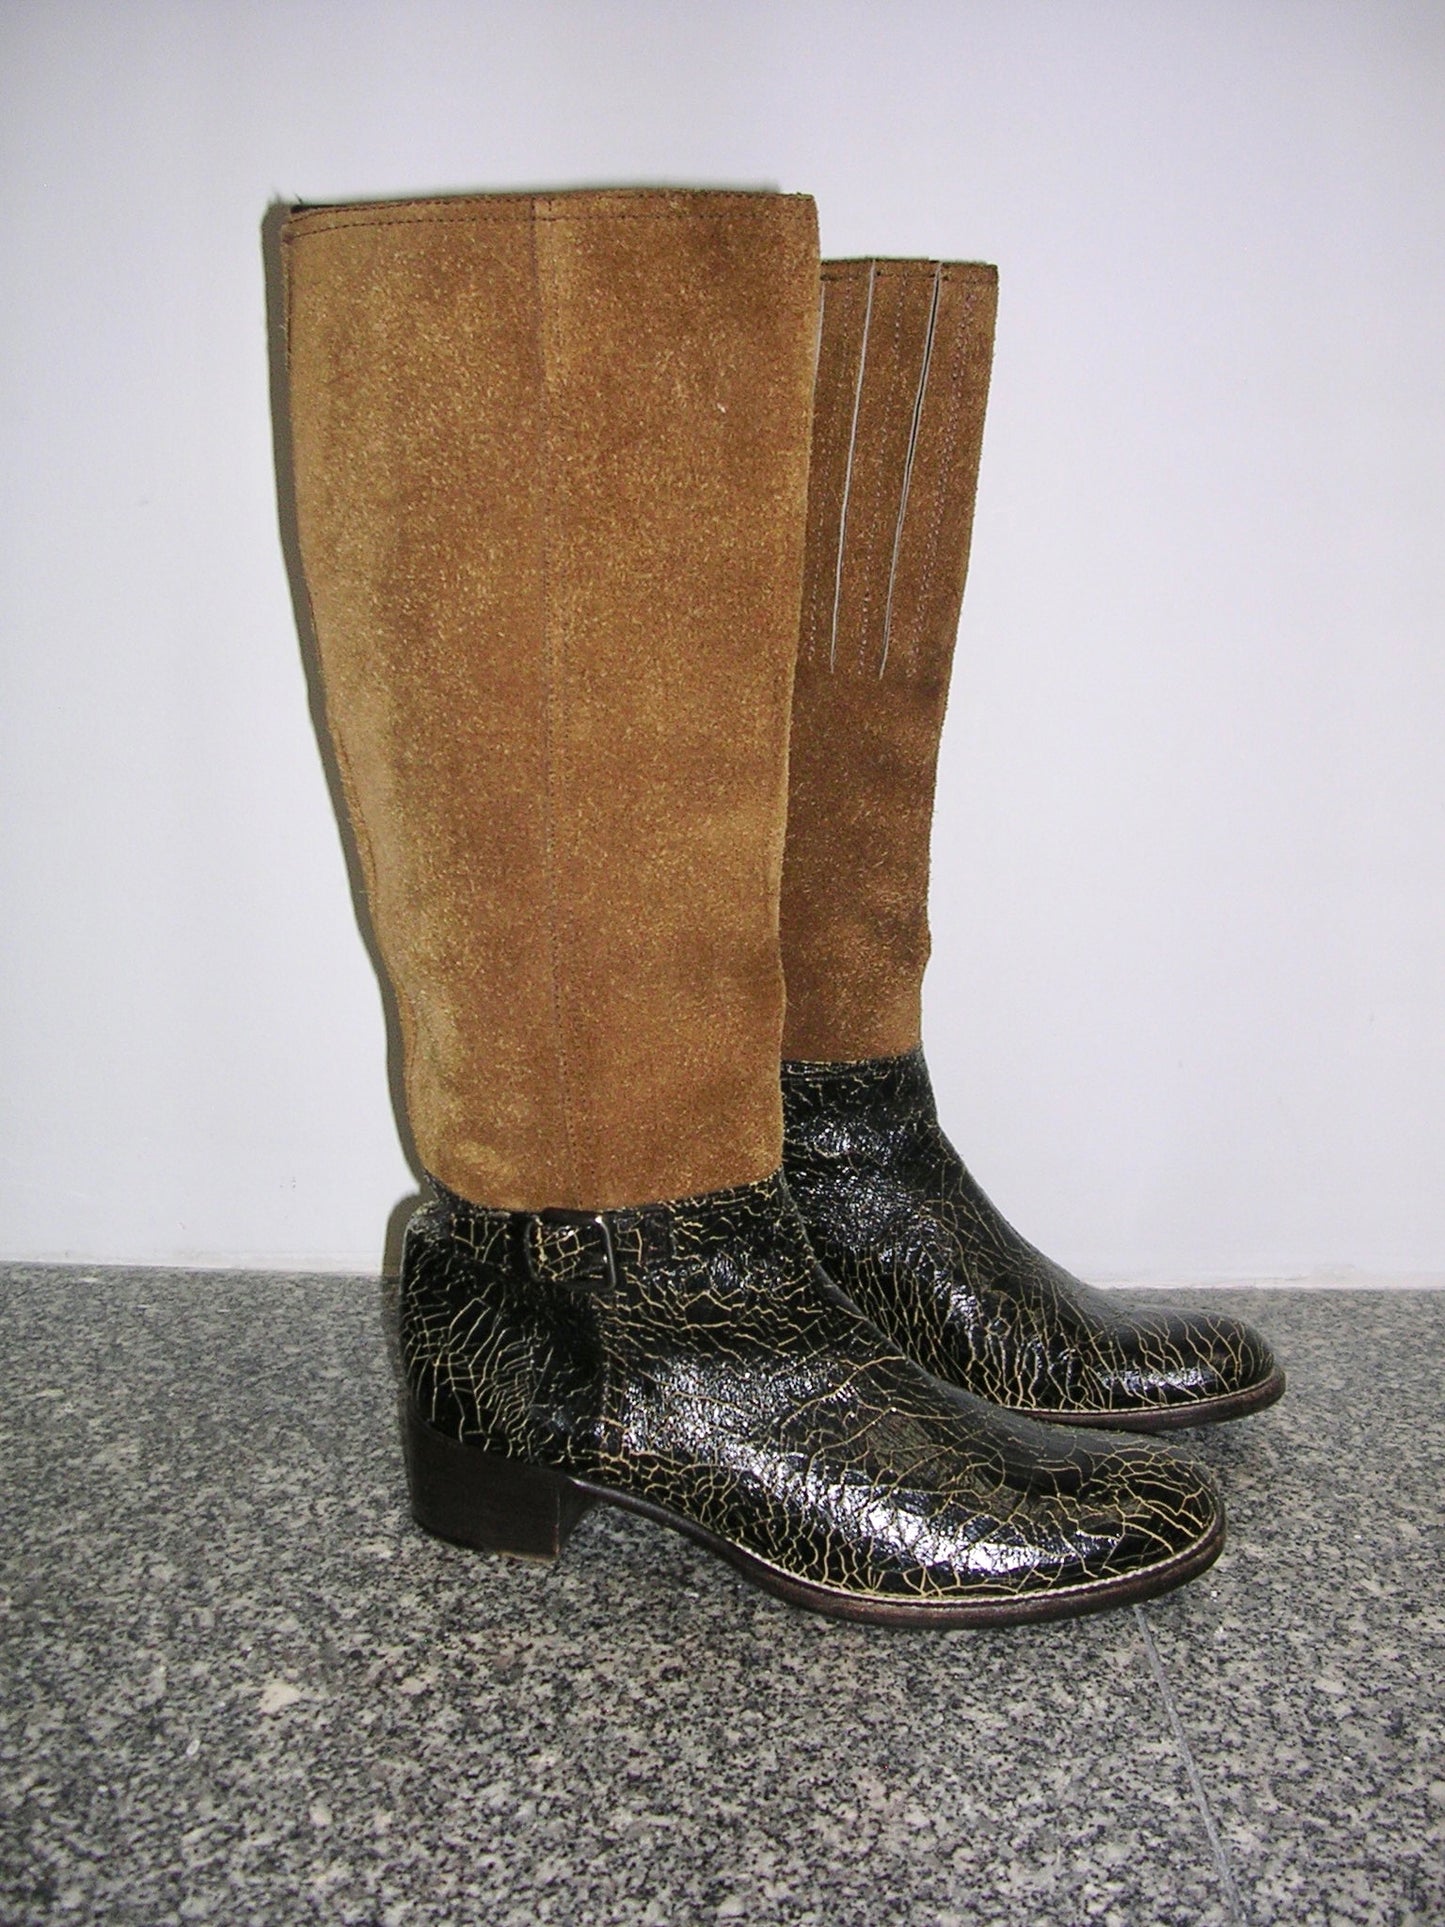 Miu Miu Cracked Leather Riding Boots 39.5